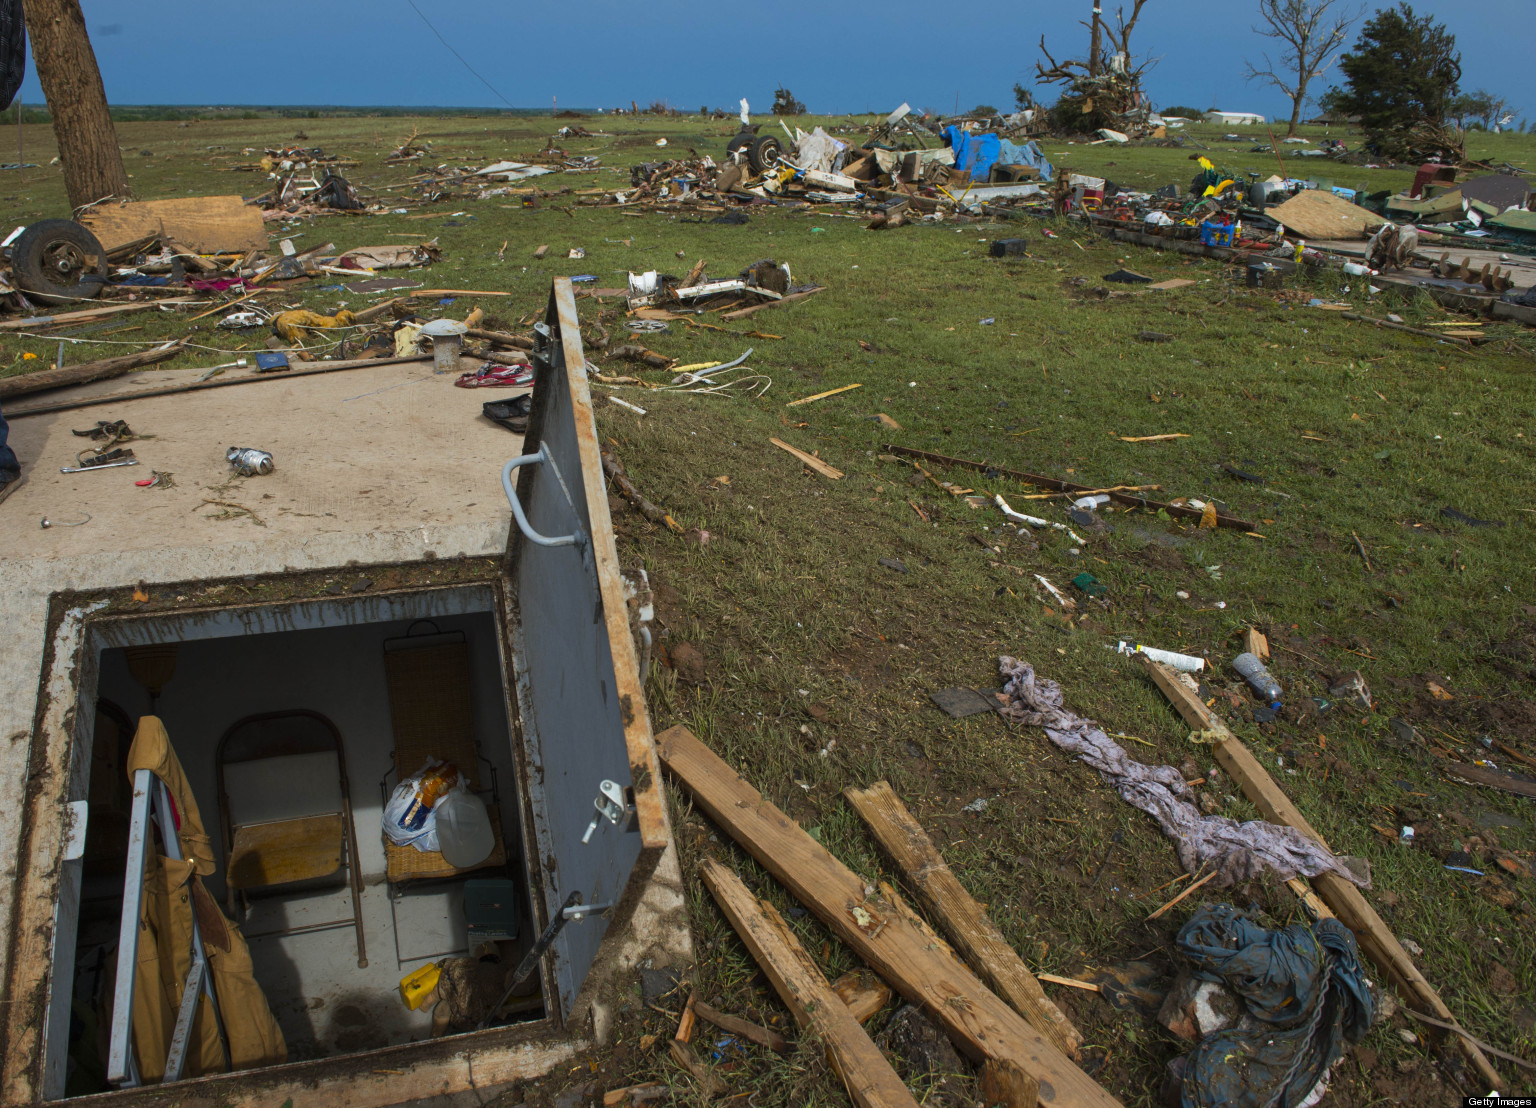 Storm Shelter Business Surges Following Oklahoma Tornado Devastation